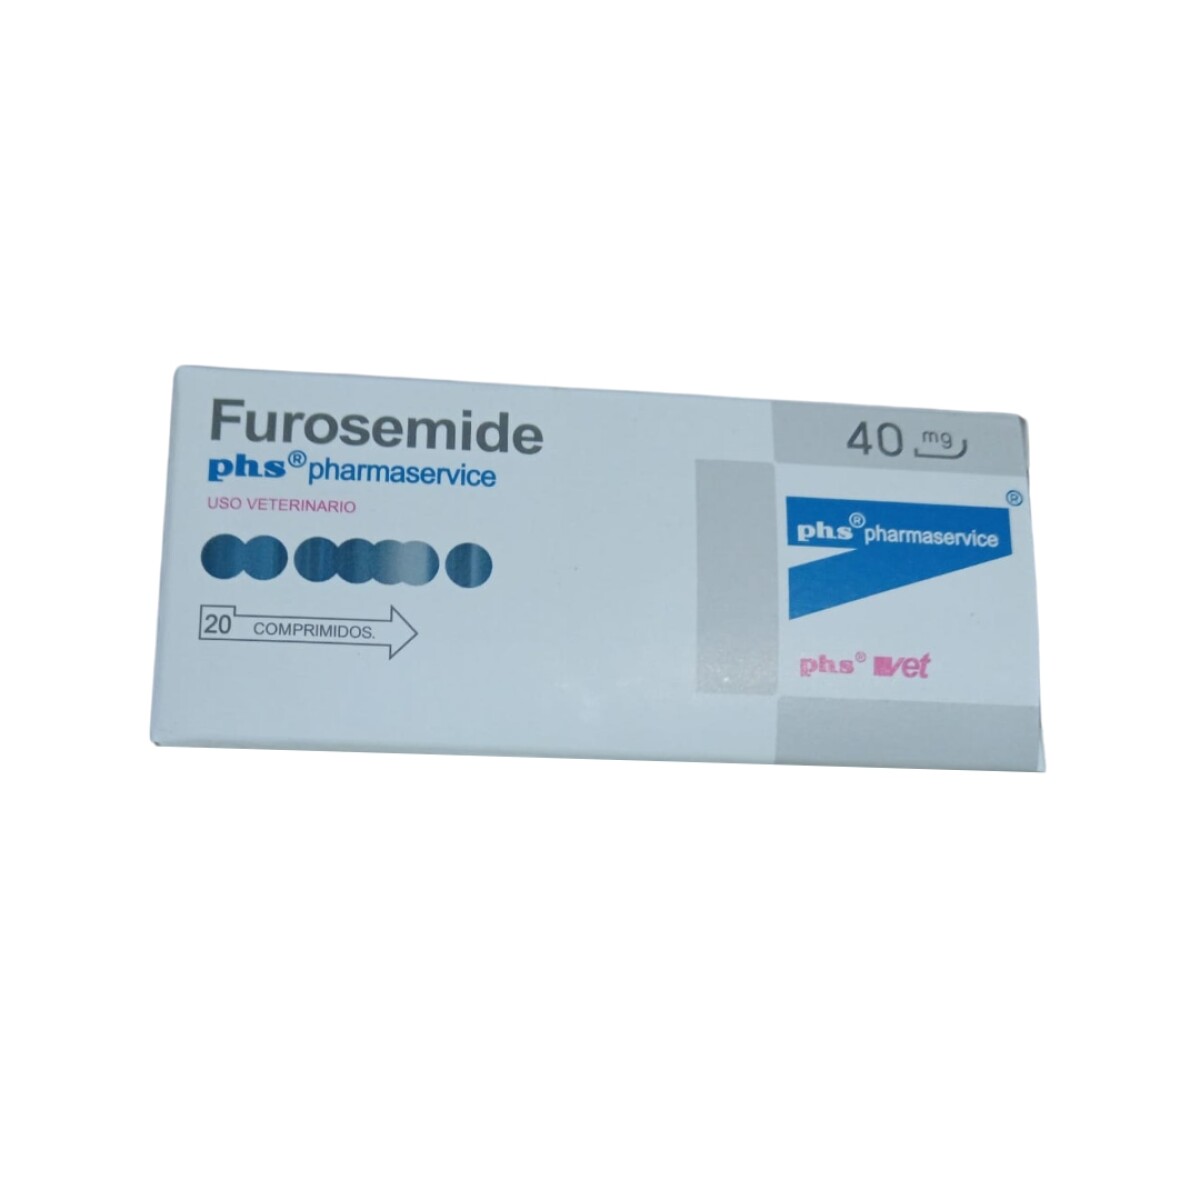 Furosemide Phs (pharmaservice) 40 Mg * 20 Comp 